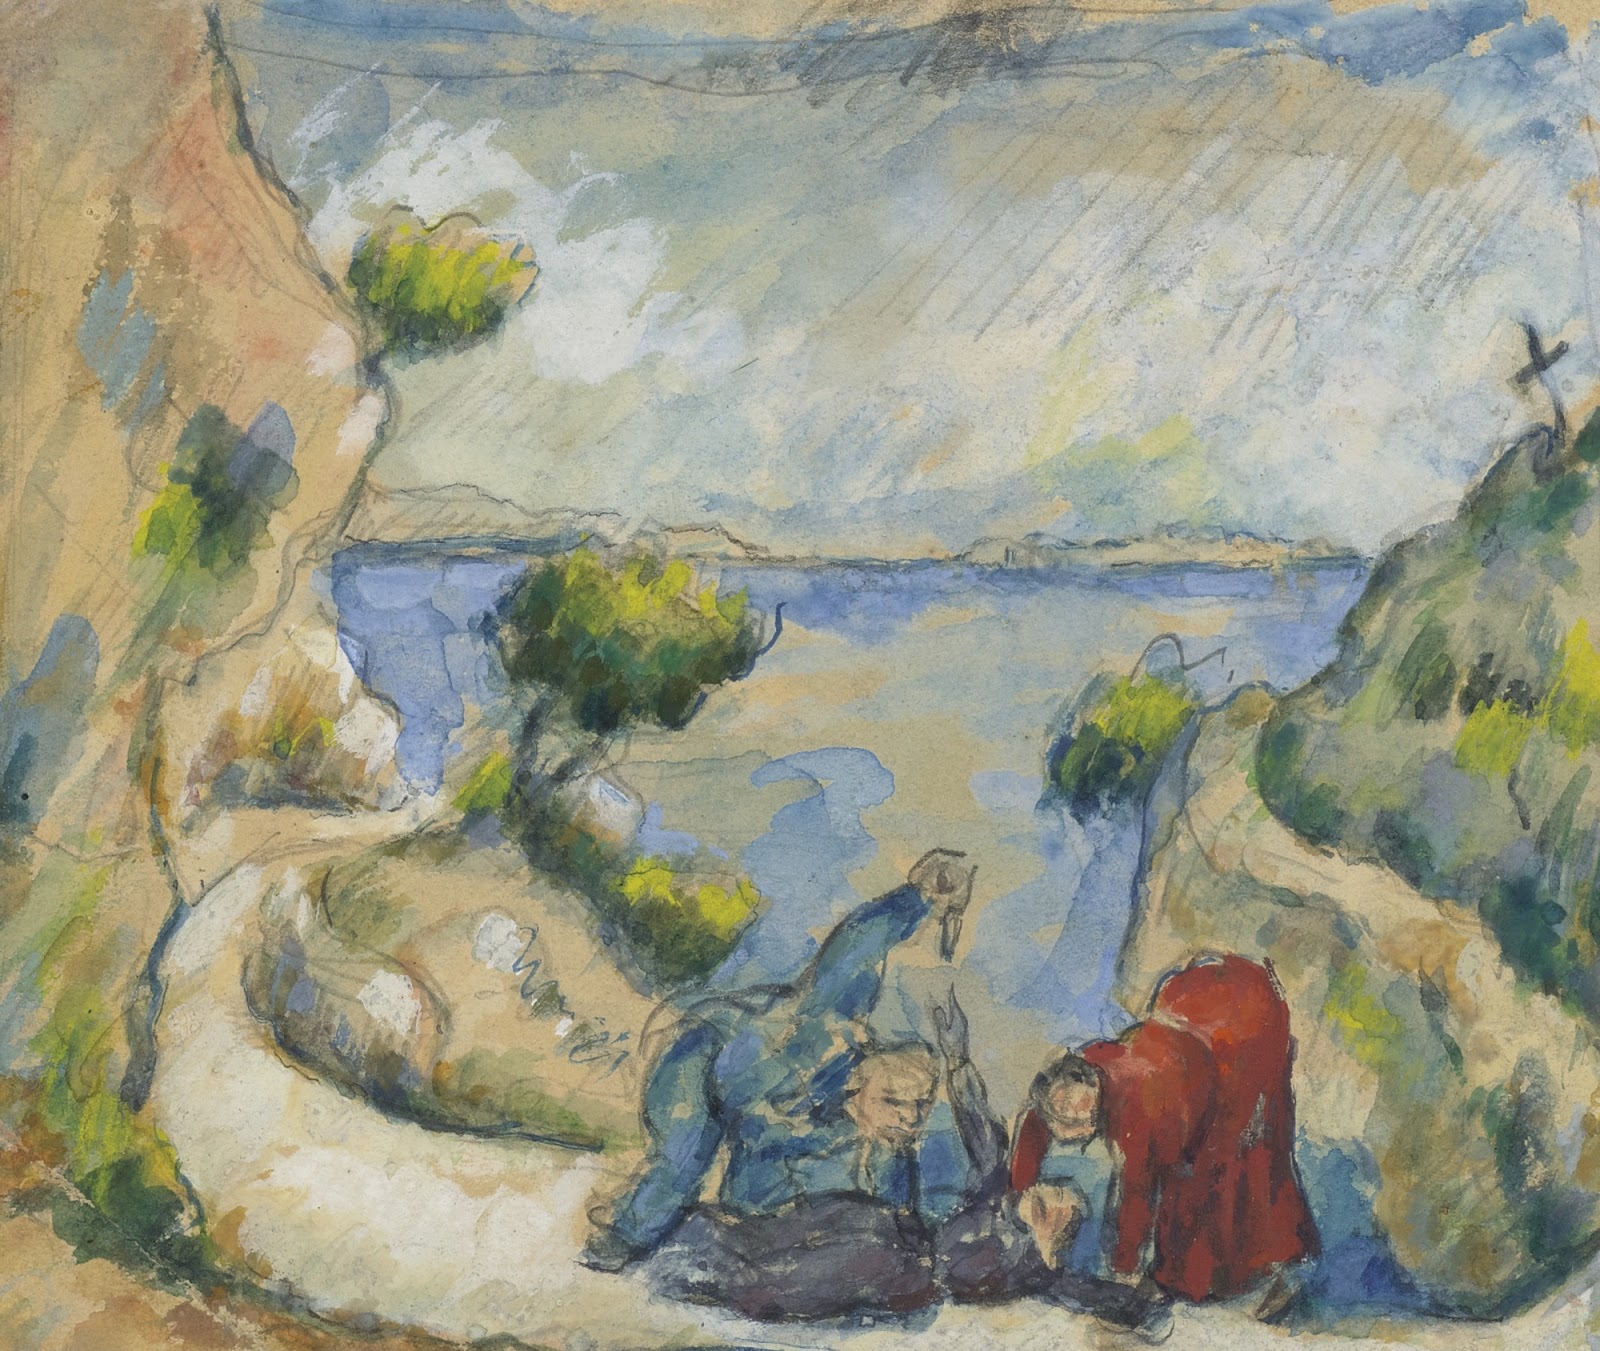 Paul+Cezanne-1839-1906 (182).jpg